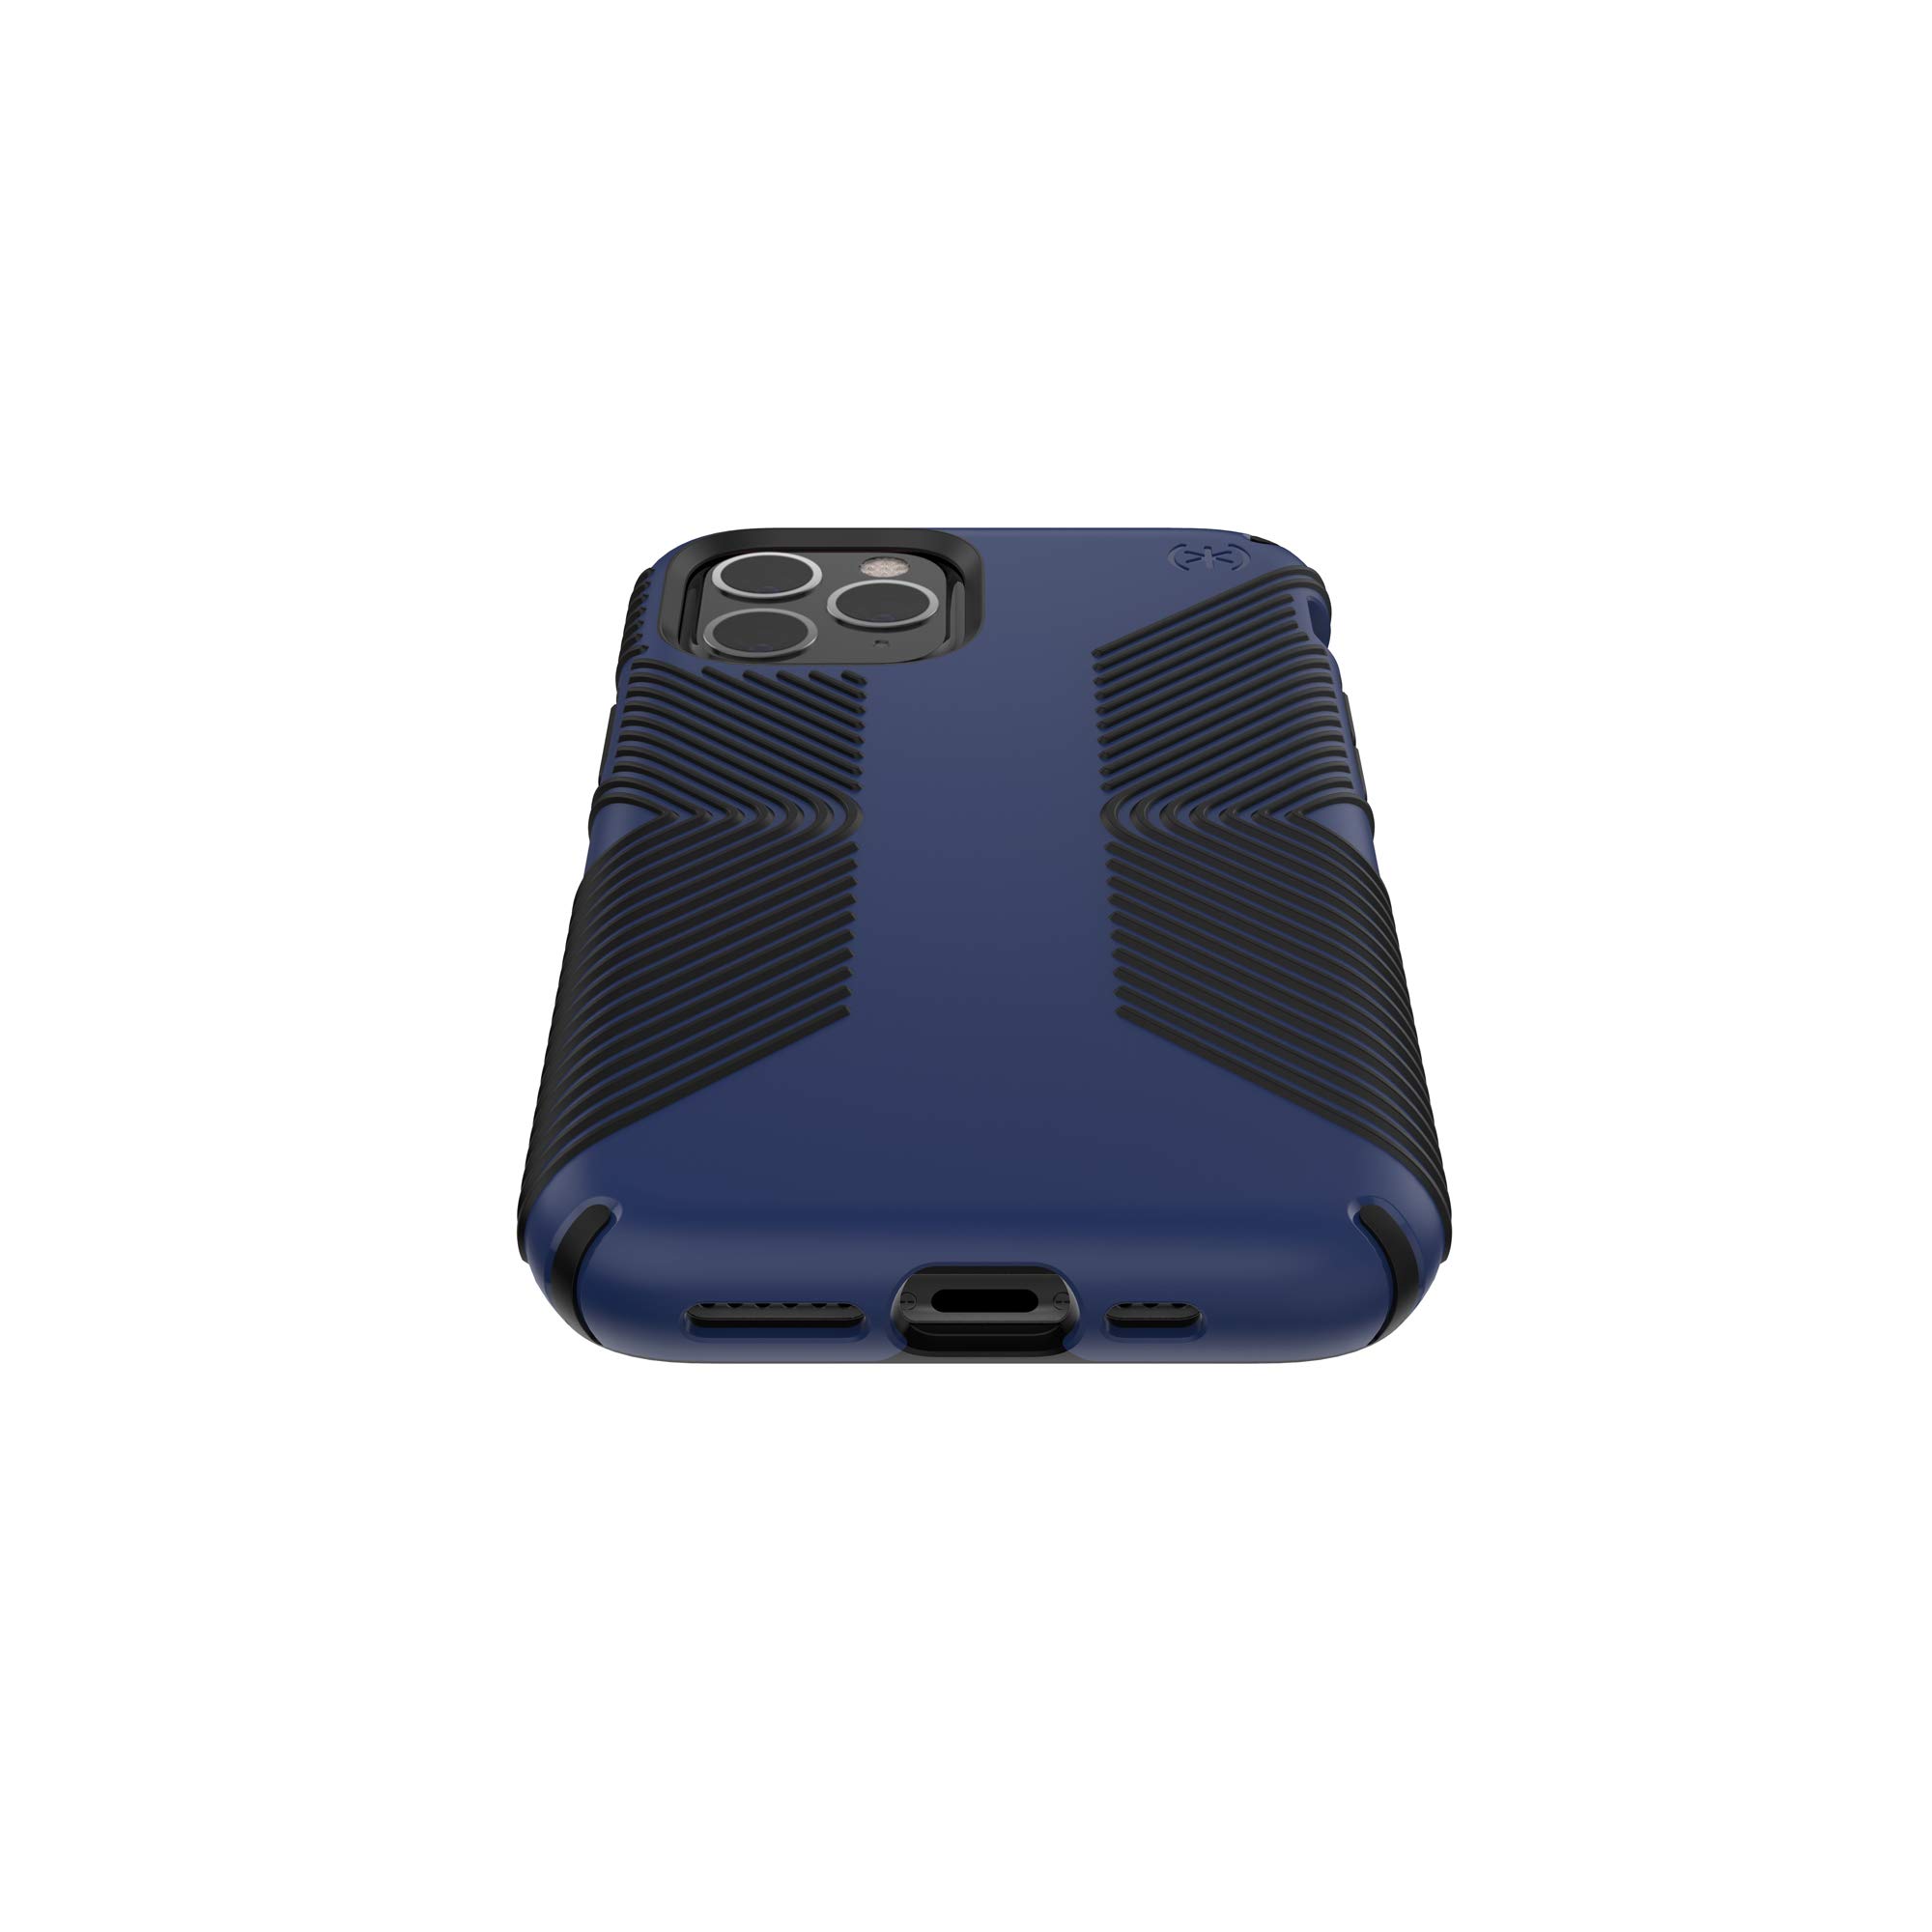 Speck Products Presidio Grip iPhone 11 Pro Case, Polycarbonate (PC), IMPACTIUM,Slim Fit,Coastal Blue/Black (129892-8531)